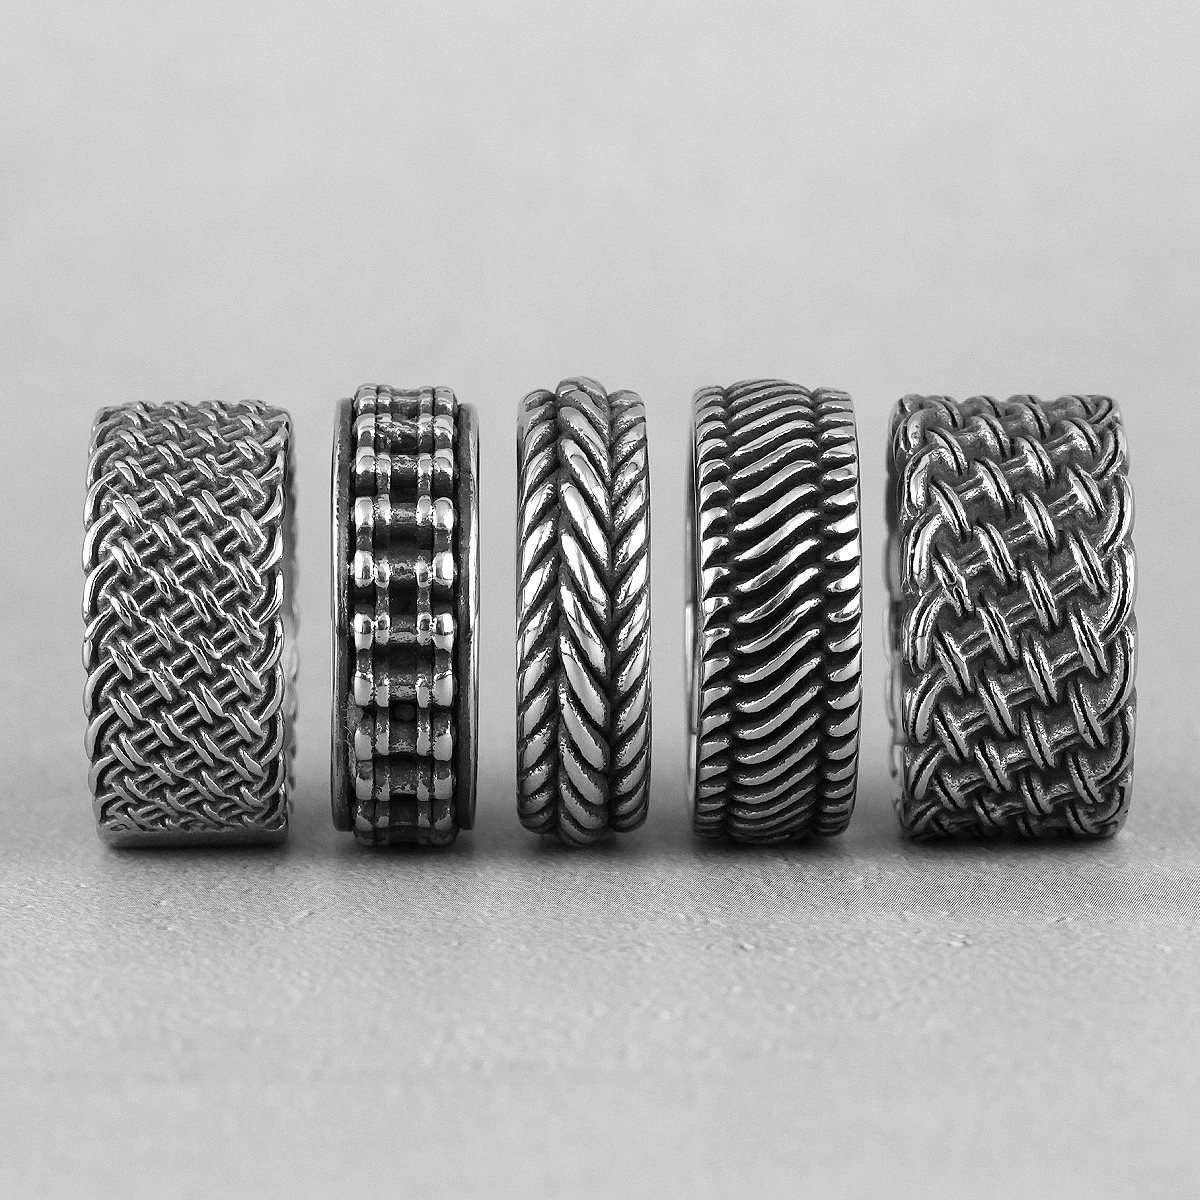 Grid Weave Stainless Steel Mens Rings Retro Industrial Style Simple for Male Boyfriend Biker Jewelry Creativity Gift Wholesale